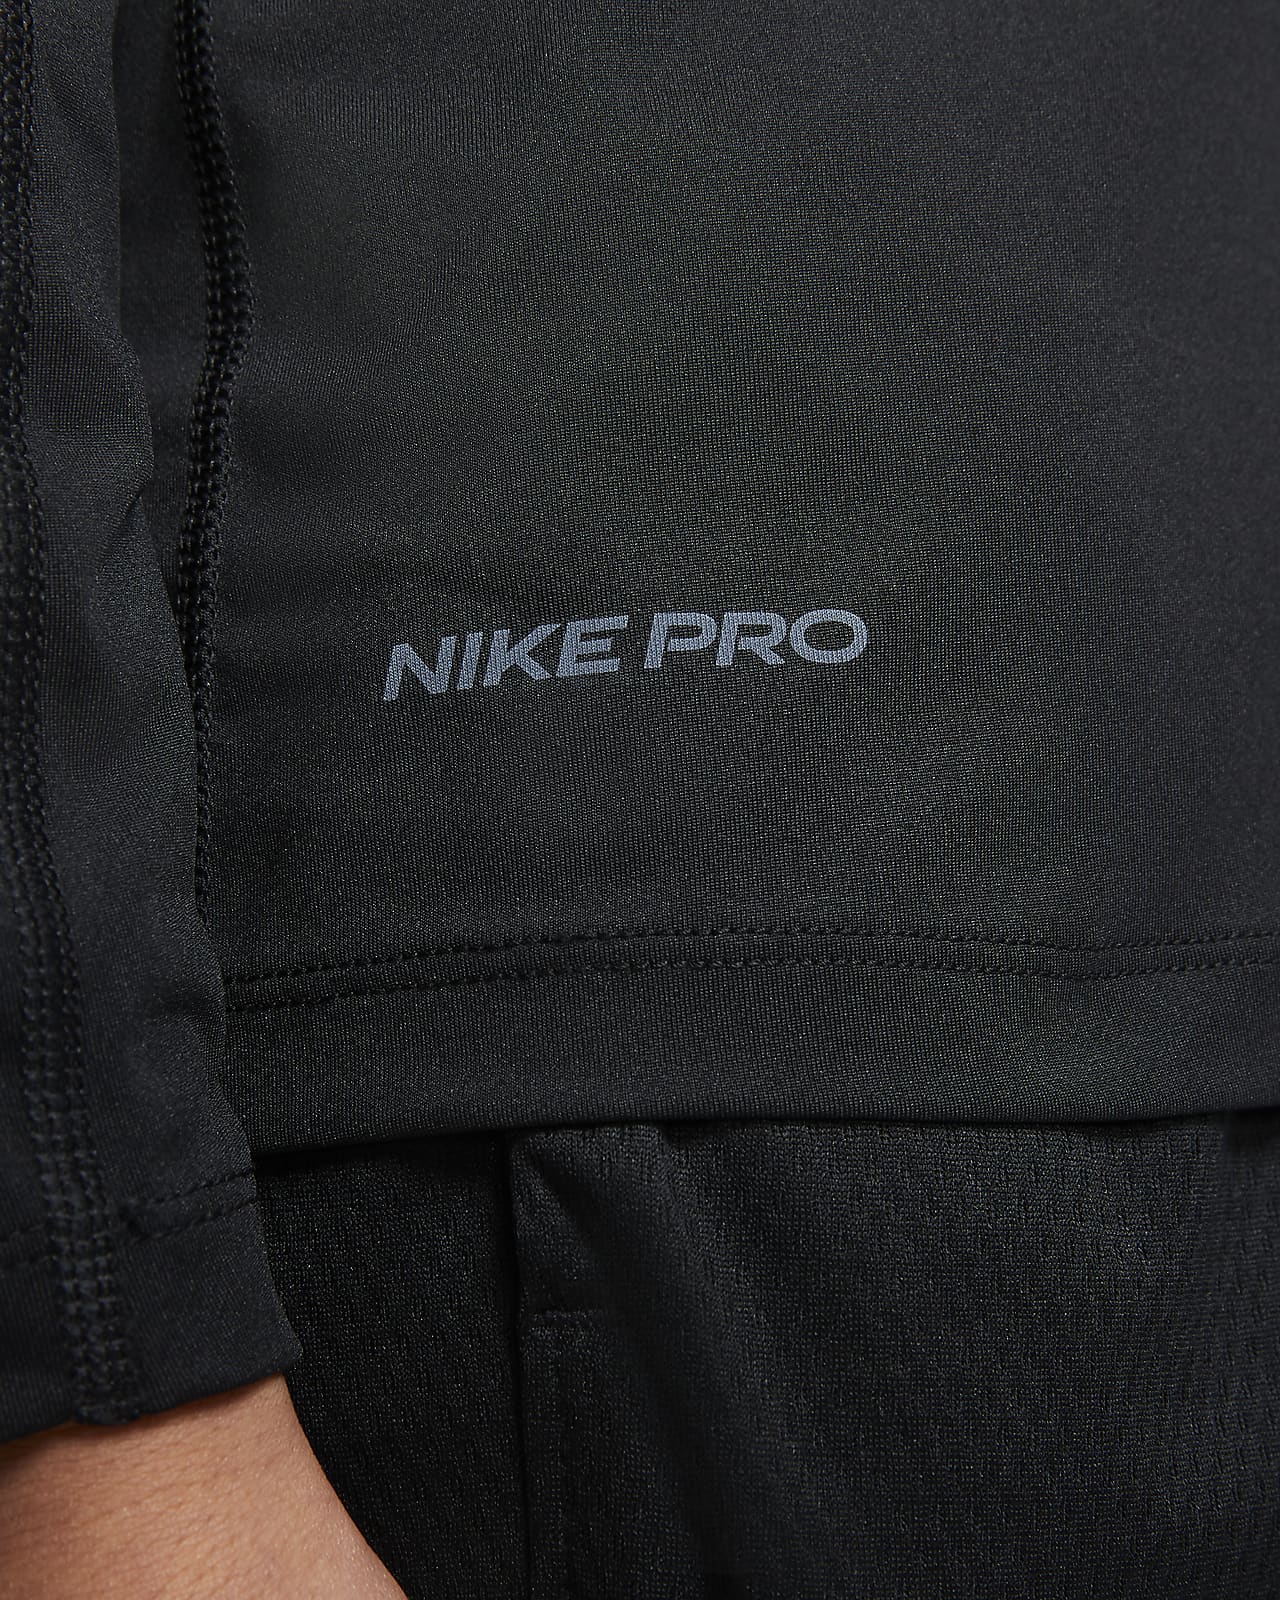 Nike Pro Older Kids' (Boys') Long-Sleeve Training Top. Nike AE